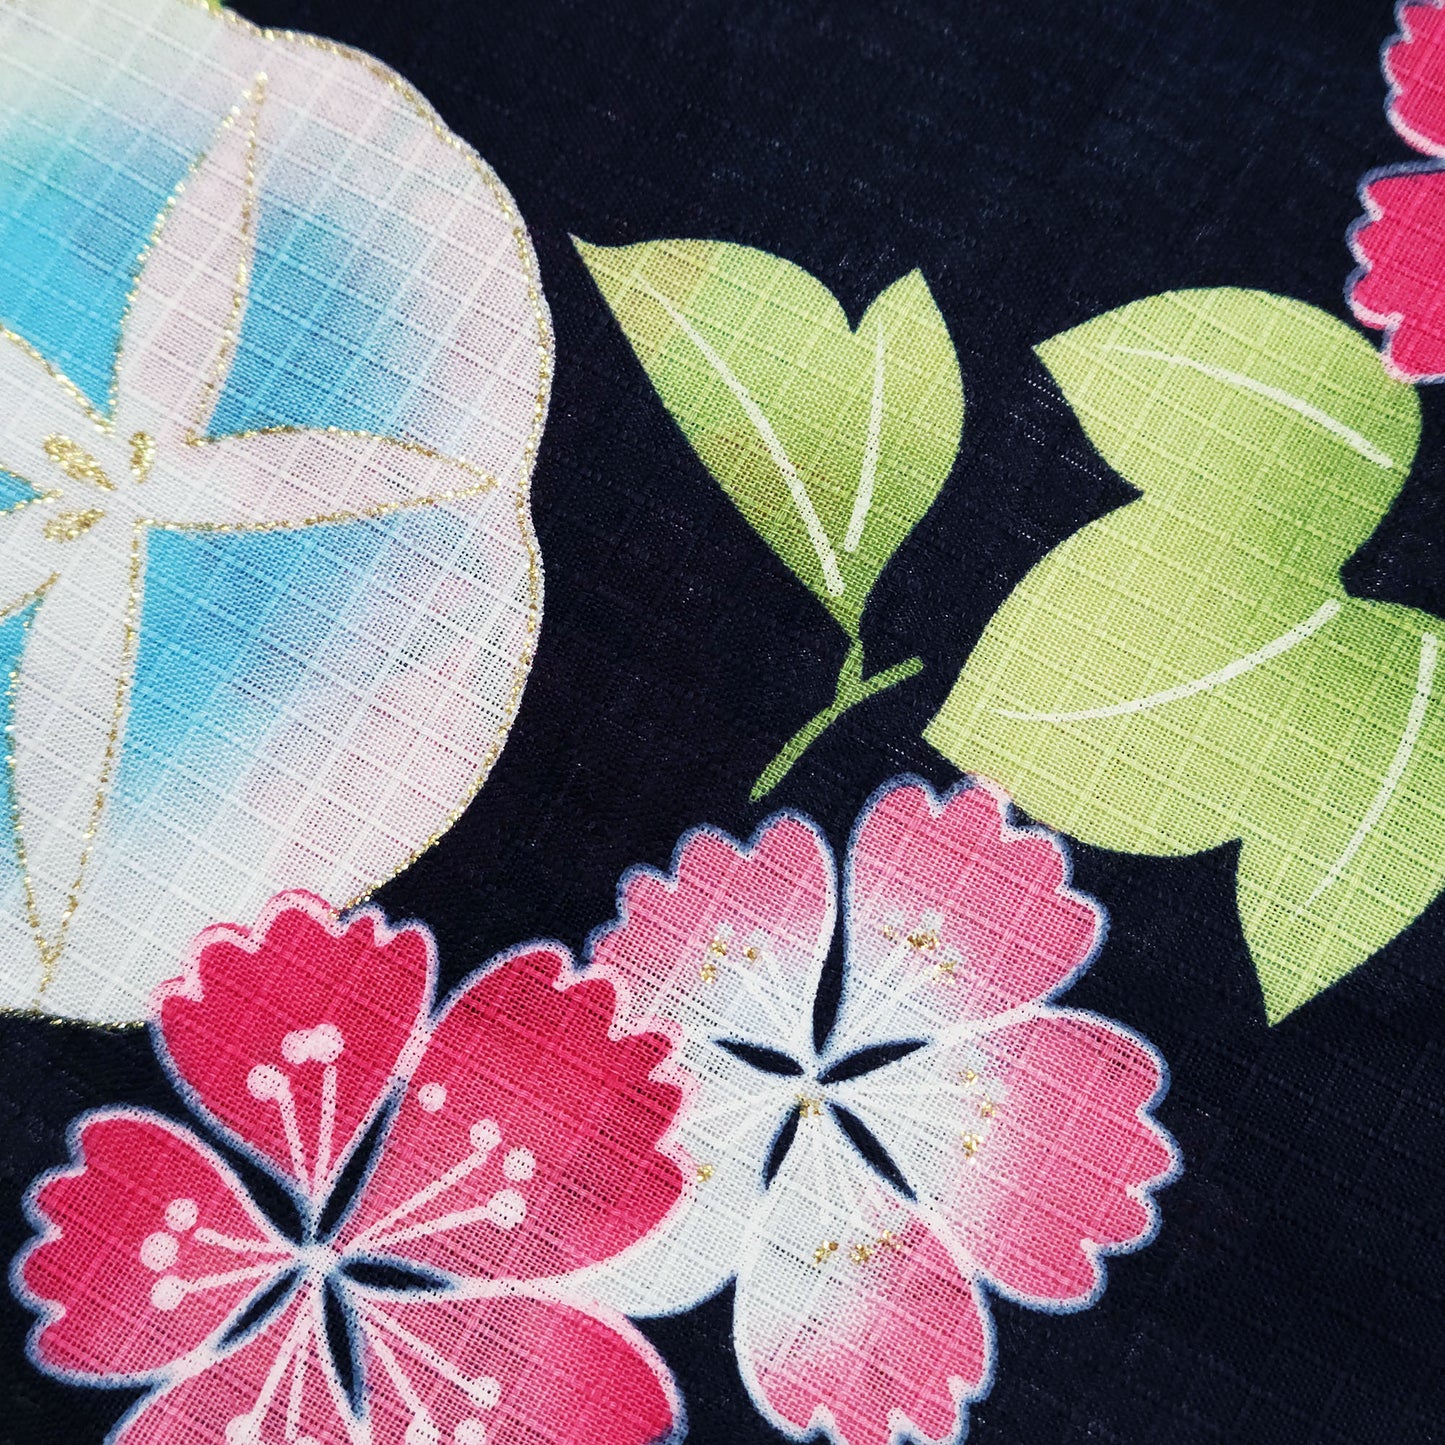 Yukata Kimono Gift Set - Colorful Morning Glory and Cherry Blossom in Black